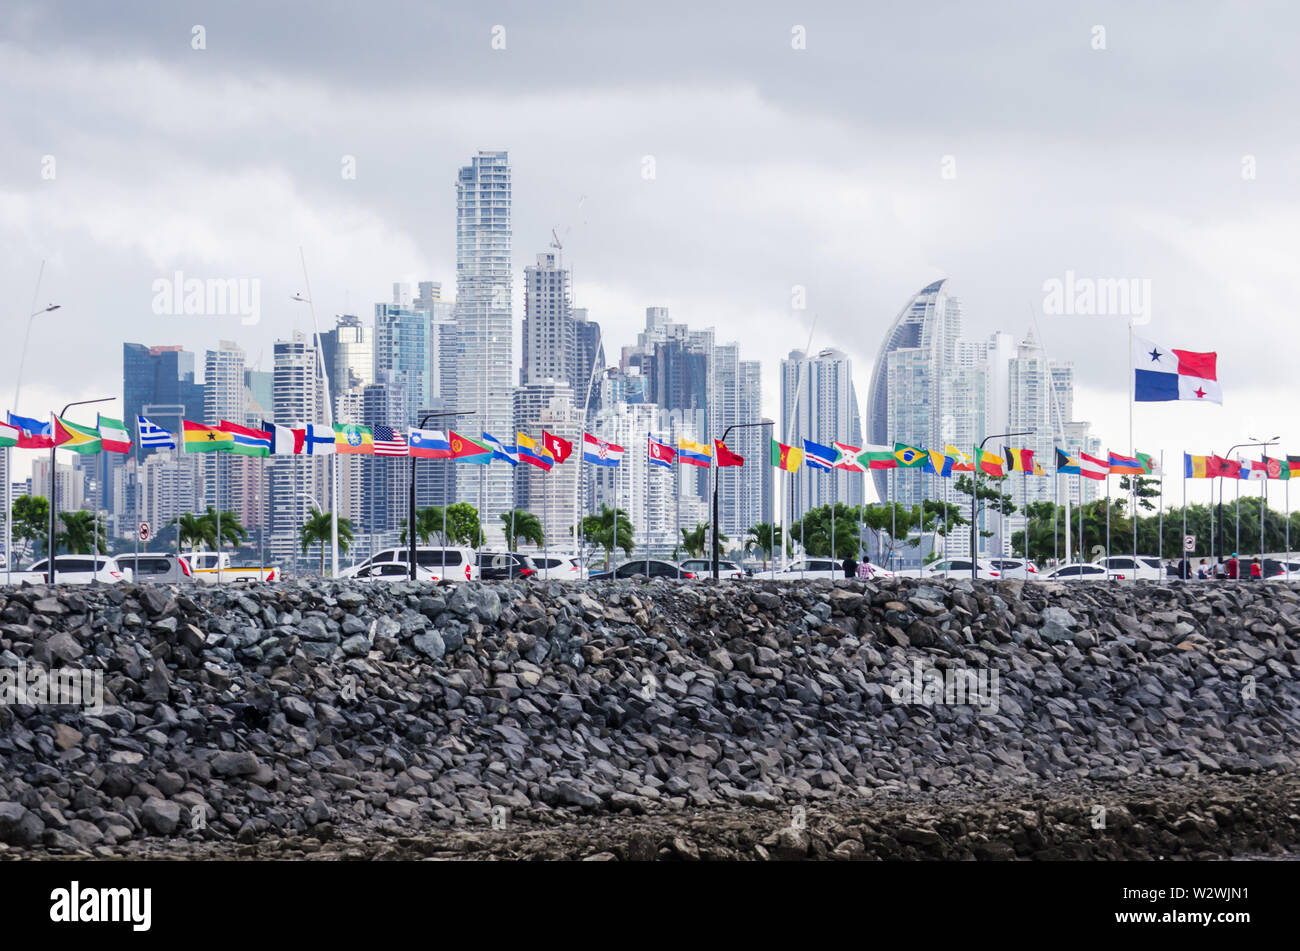 Panama City Skyline as seen from the Boardwalk Stock Photo